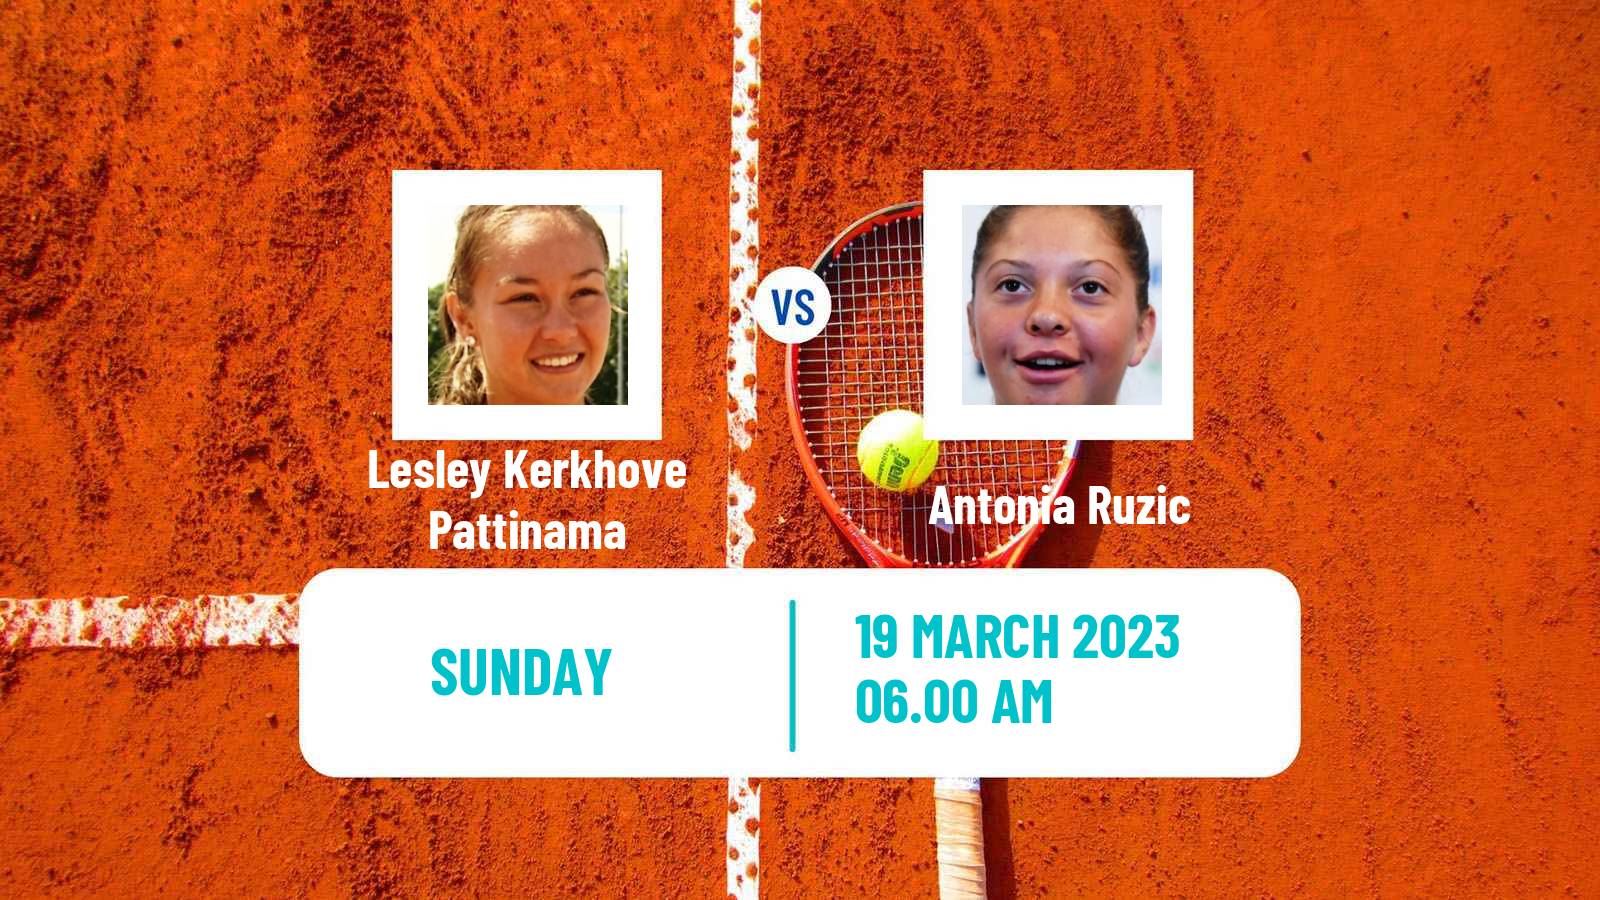 Tennis ITF Tournaments Lesley Kerkhove Pattinama - Antonia Ruzic